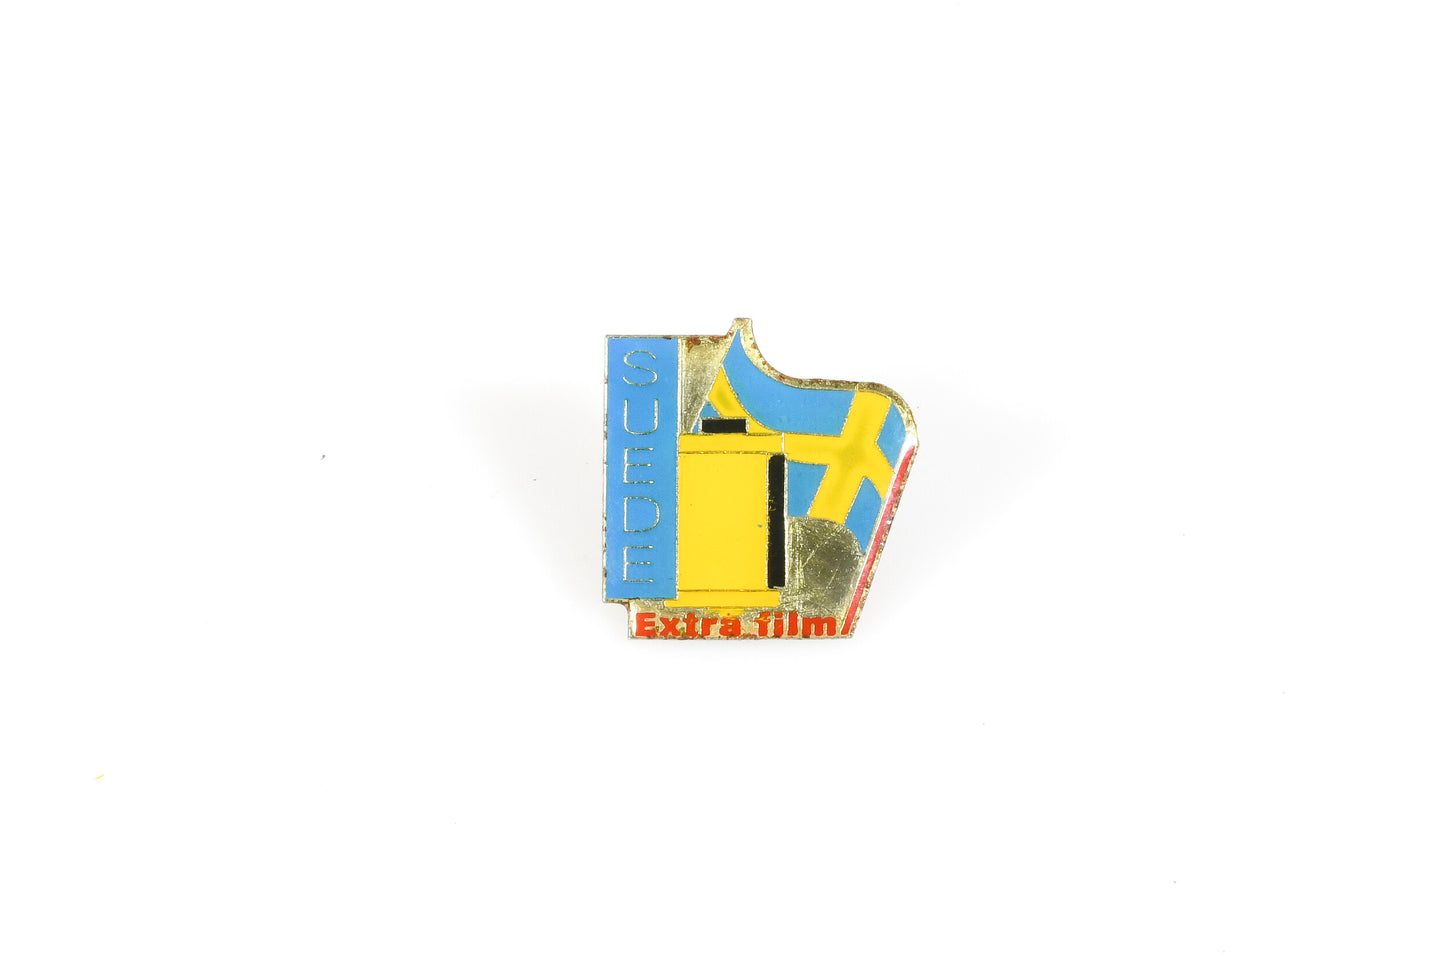 Extrafilm Sweden Vintage Bronze Pin Badge